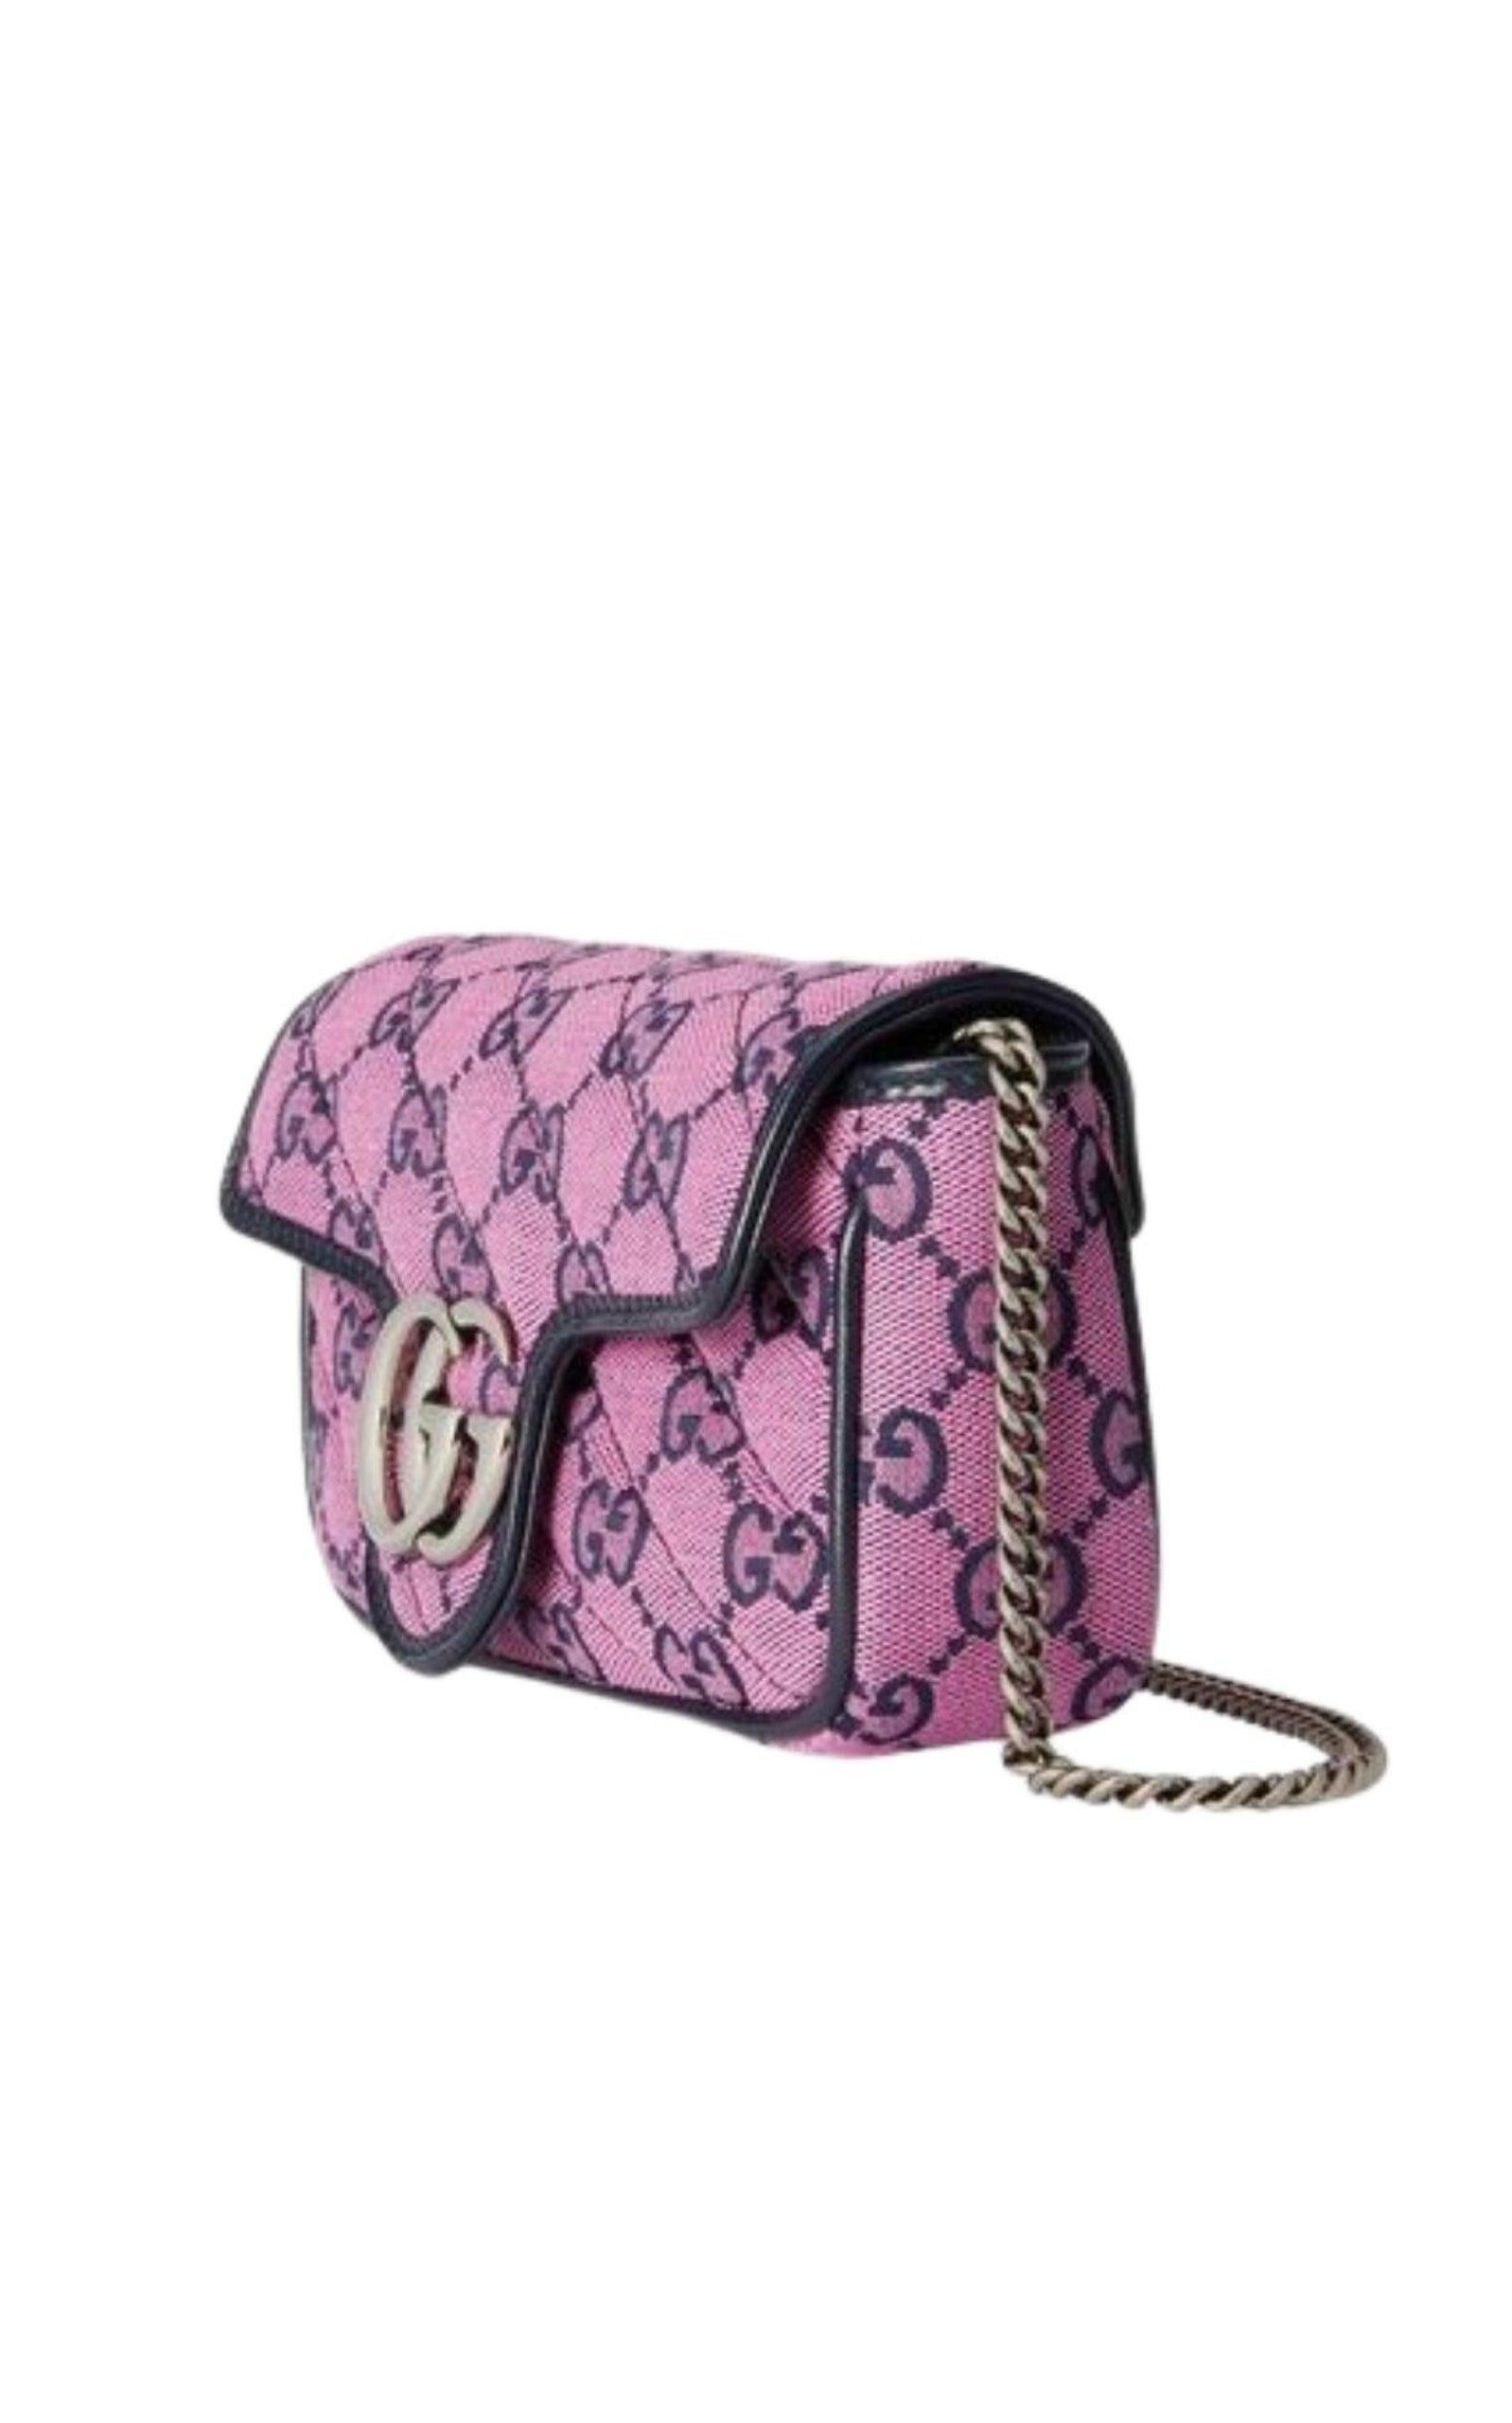 Gucci Pink Marmont Mini Bag